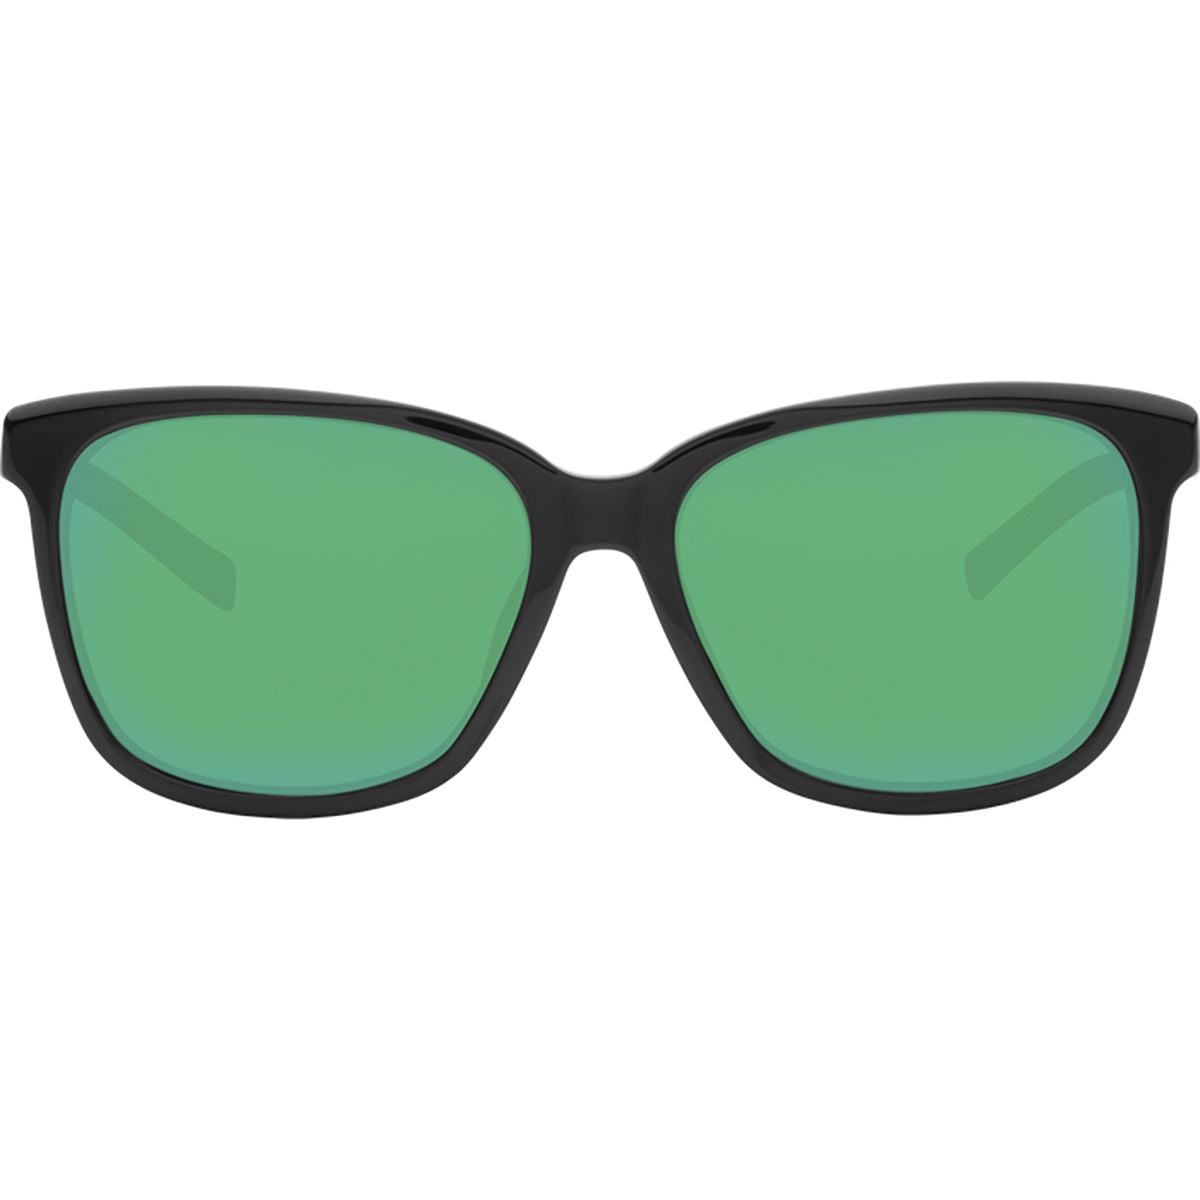 Costa May 580G Polarized Sunglasses - Women's | eBay